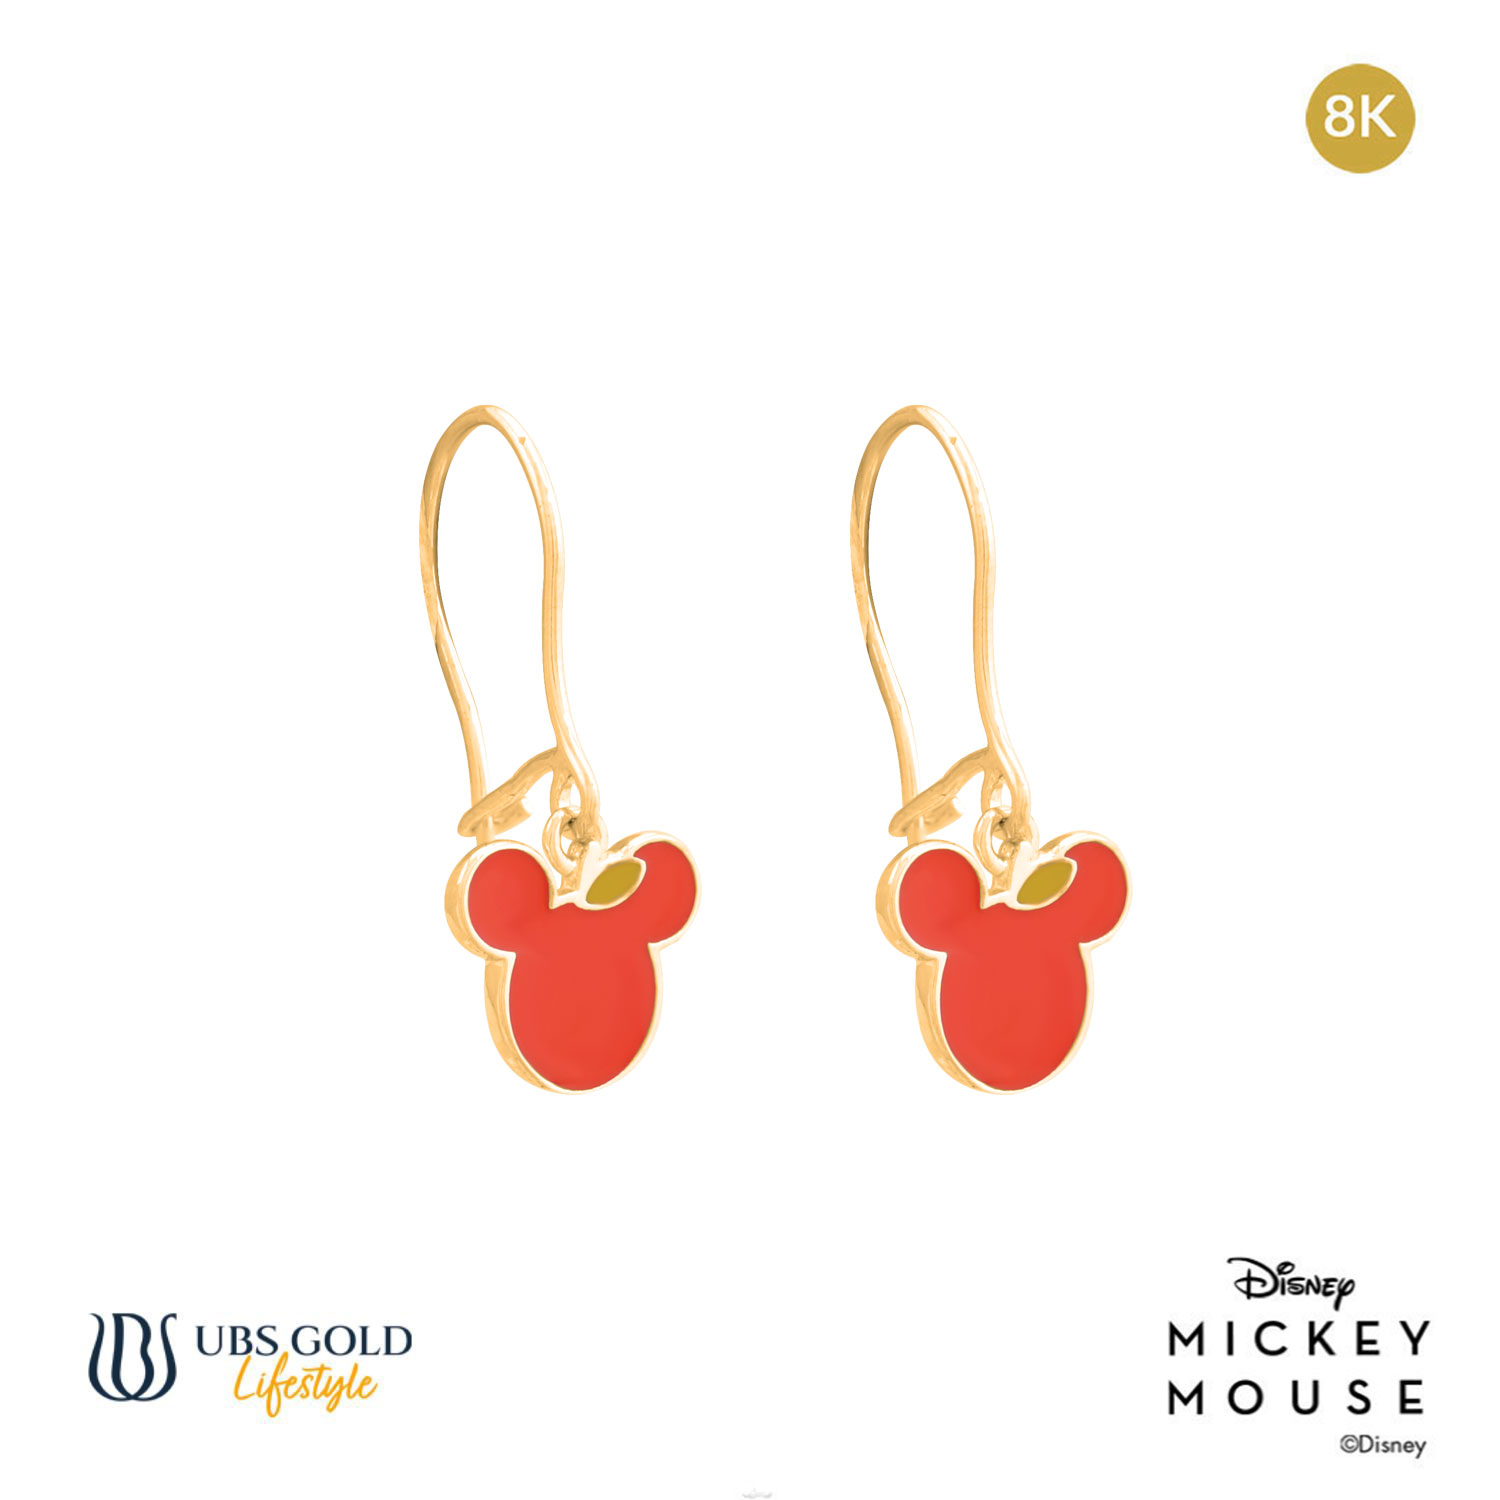 UBS Anting Emas Anak Disney Mickey Mouse - Aay0051K - 8K